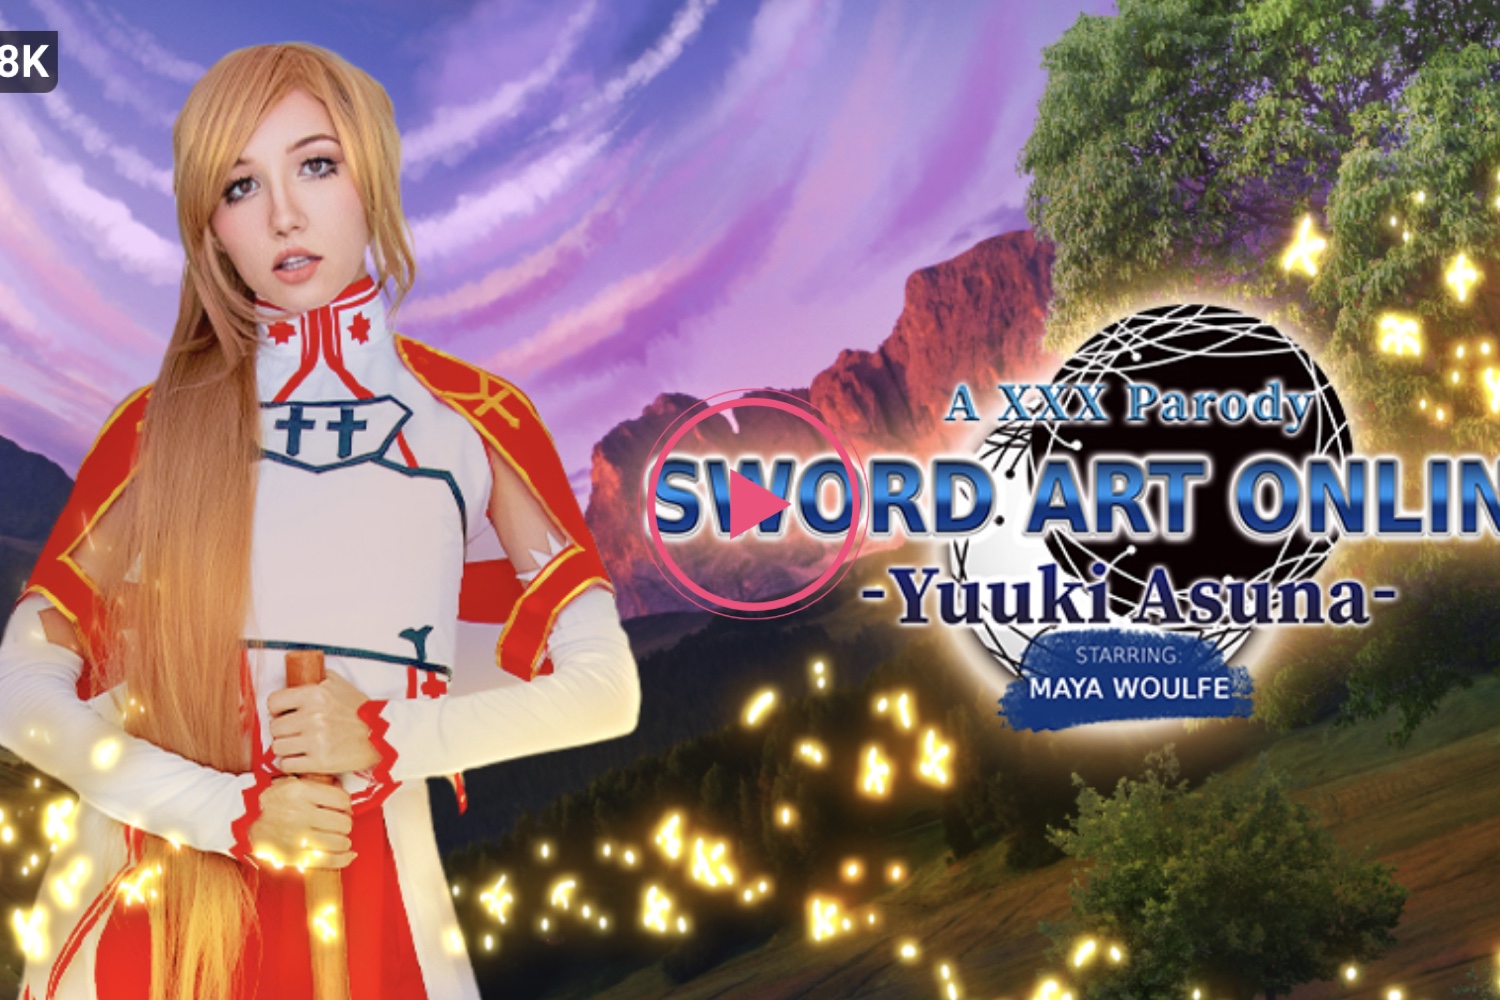 Sword Art Online: Yuuki Asuna (A XXX Parody) - Maya Woulfe VR Porn - Maya Woulfe Virtual Reality Porn